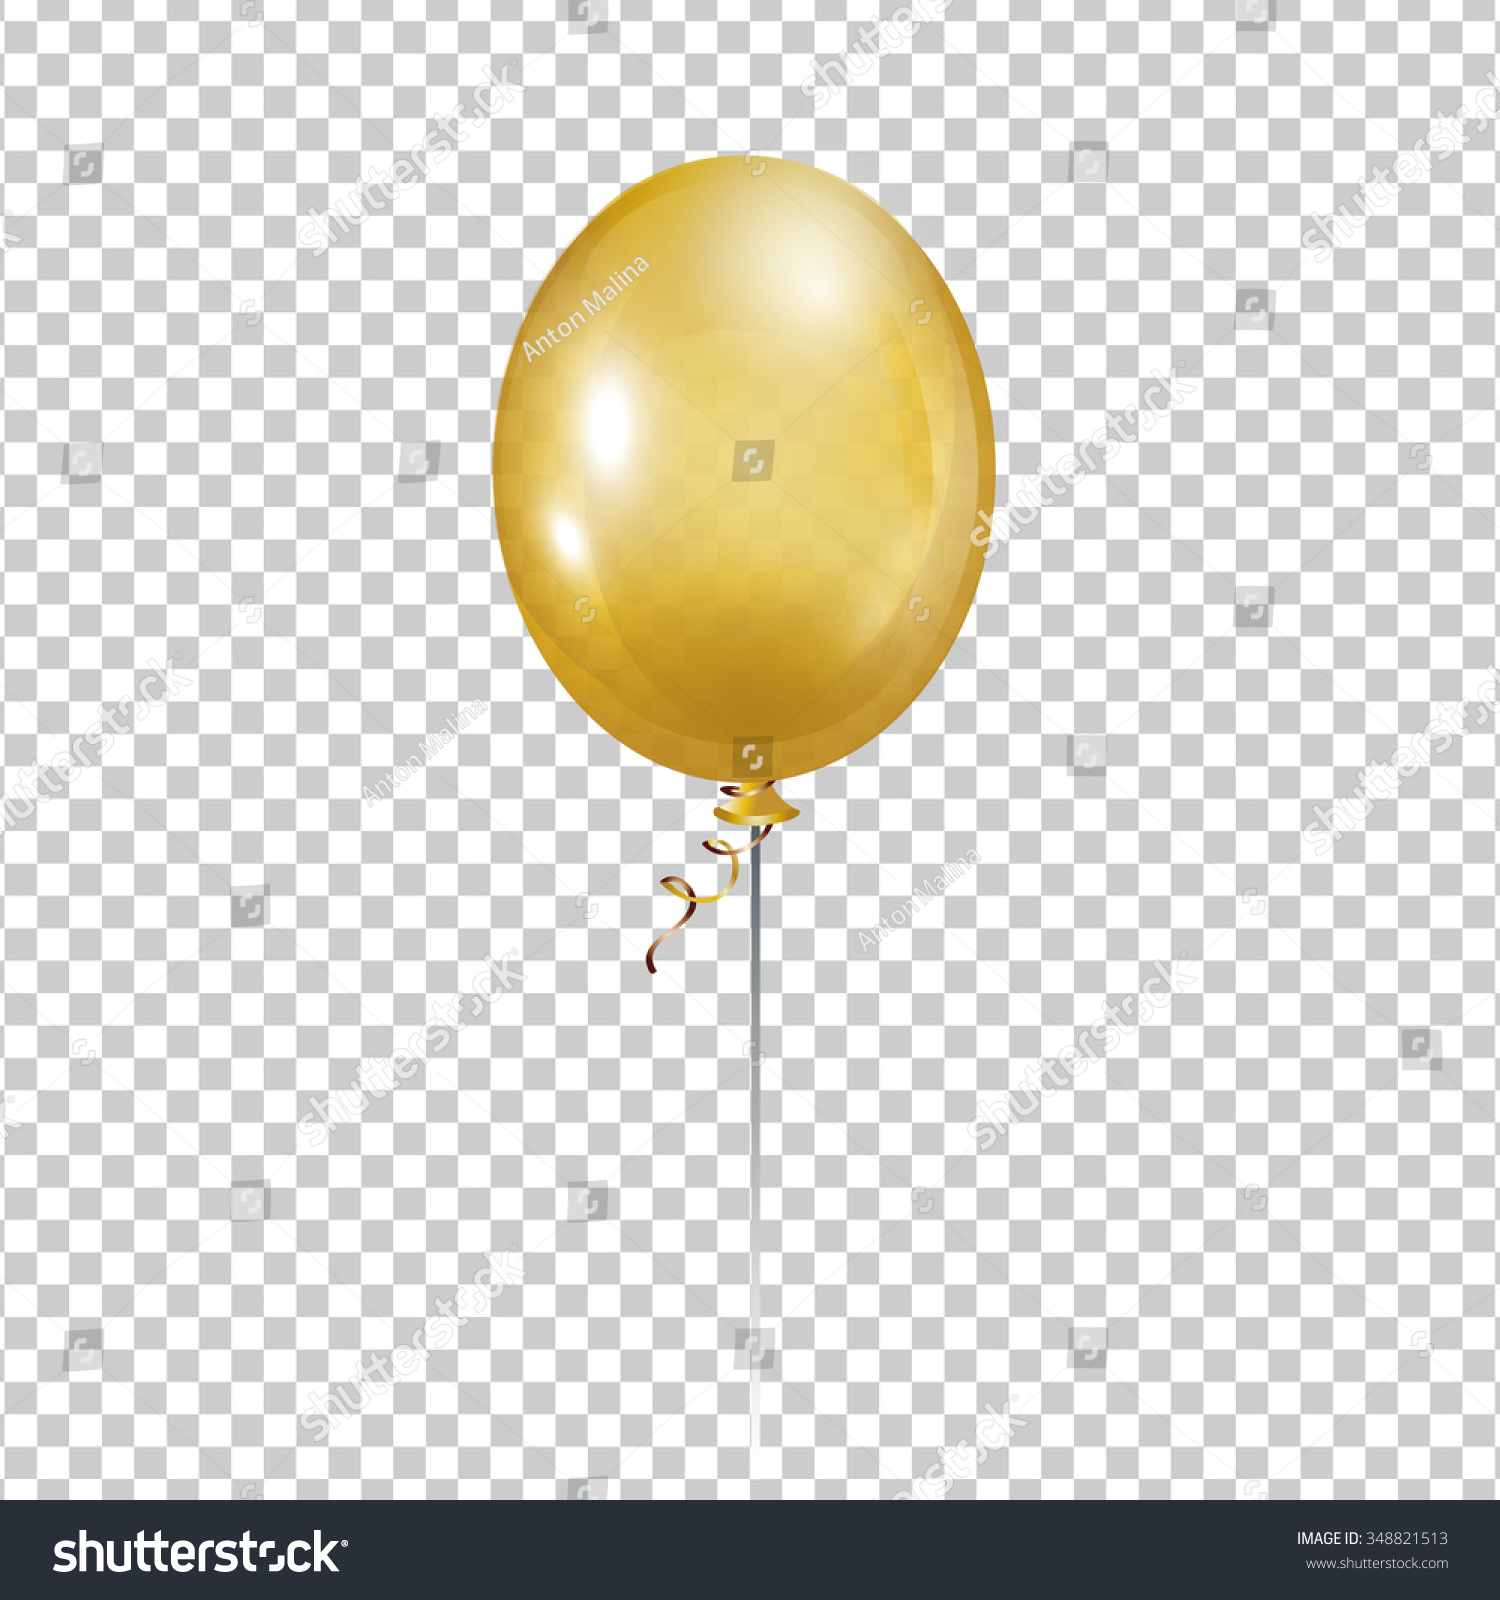 gold balloons clipart - photo #26